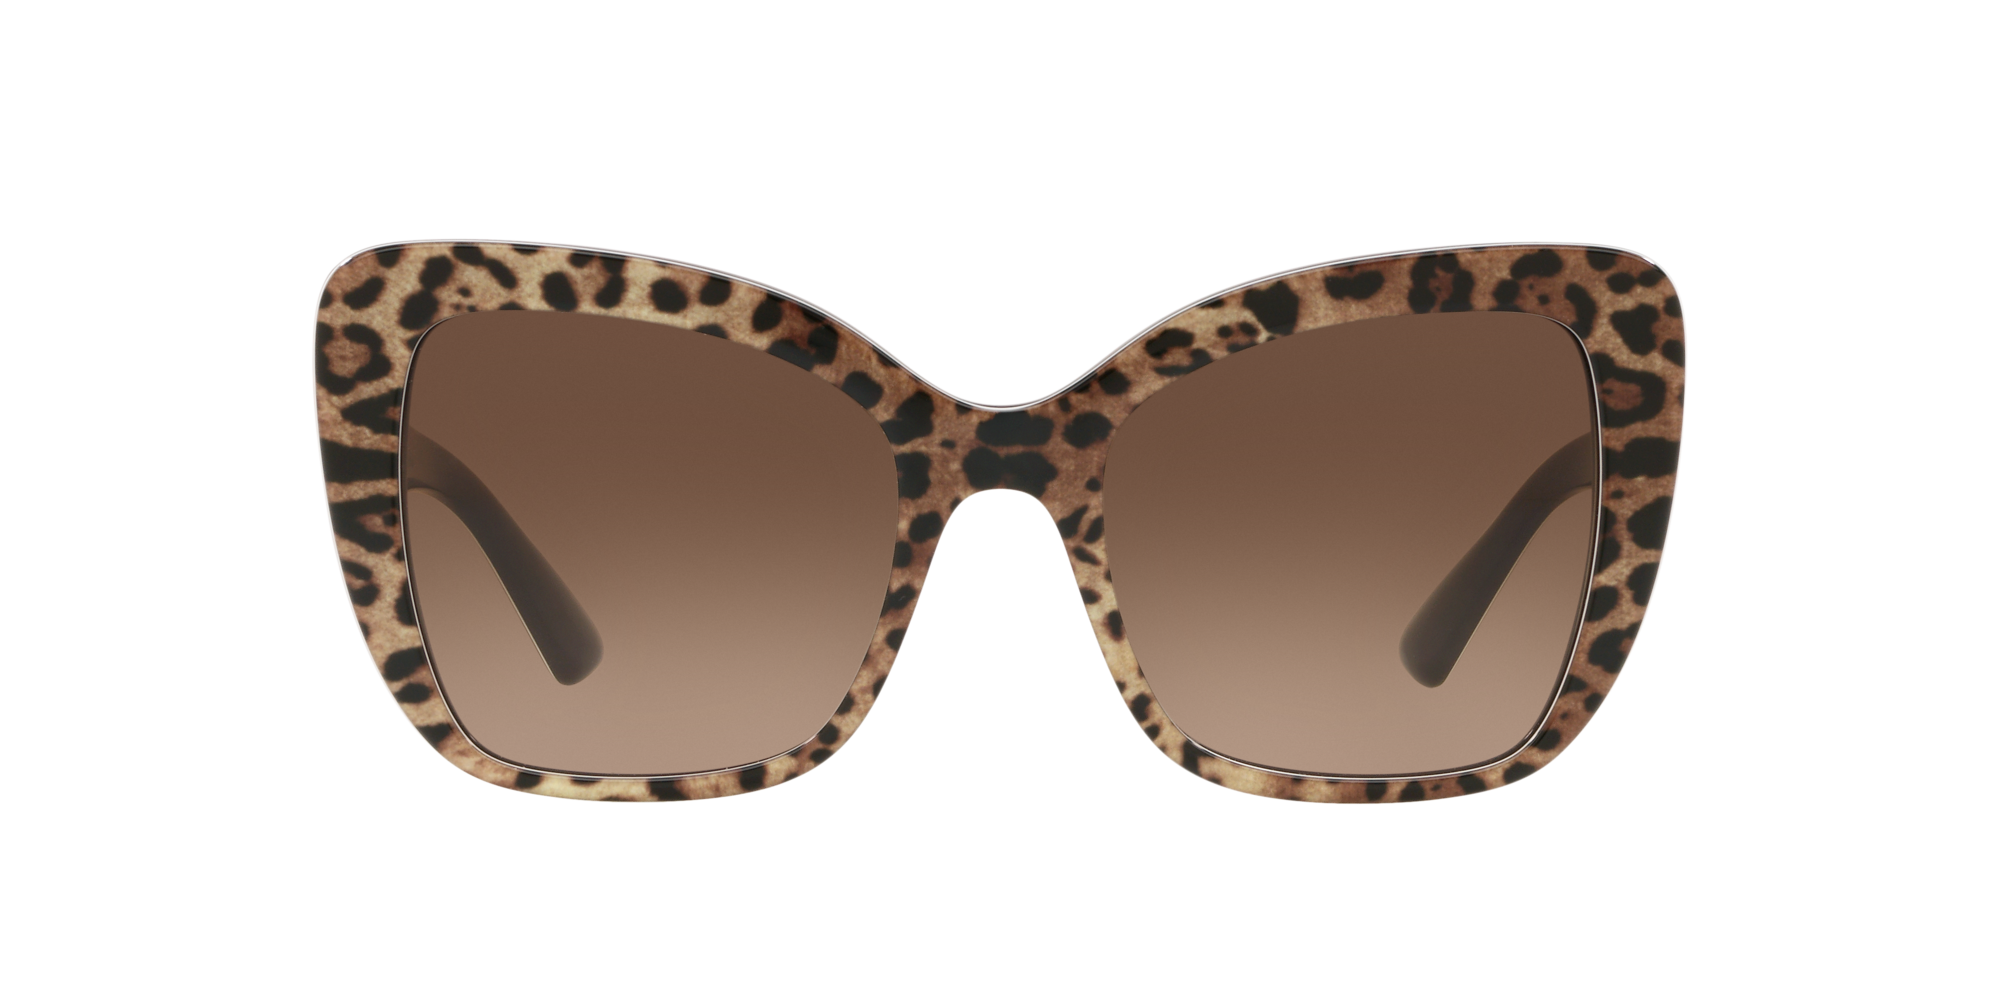 [products.image.front] Dolce&Gabbana 0DG4348 316313 Sonnenbrille